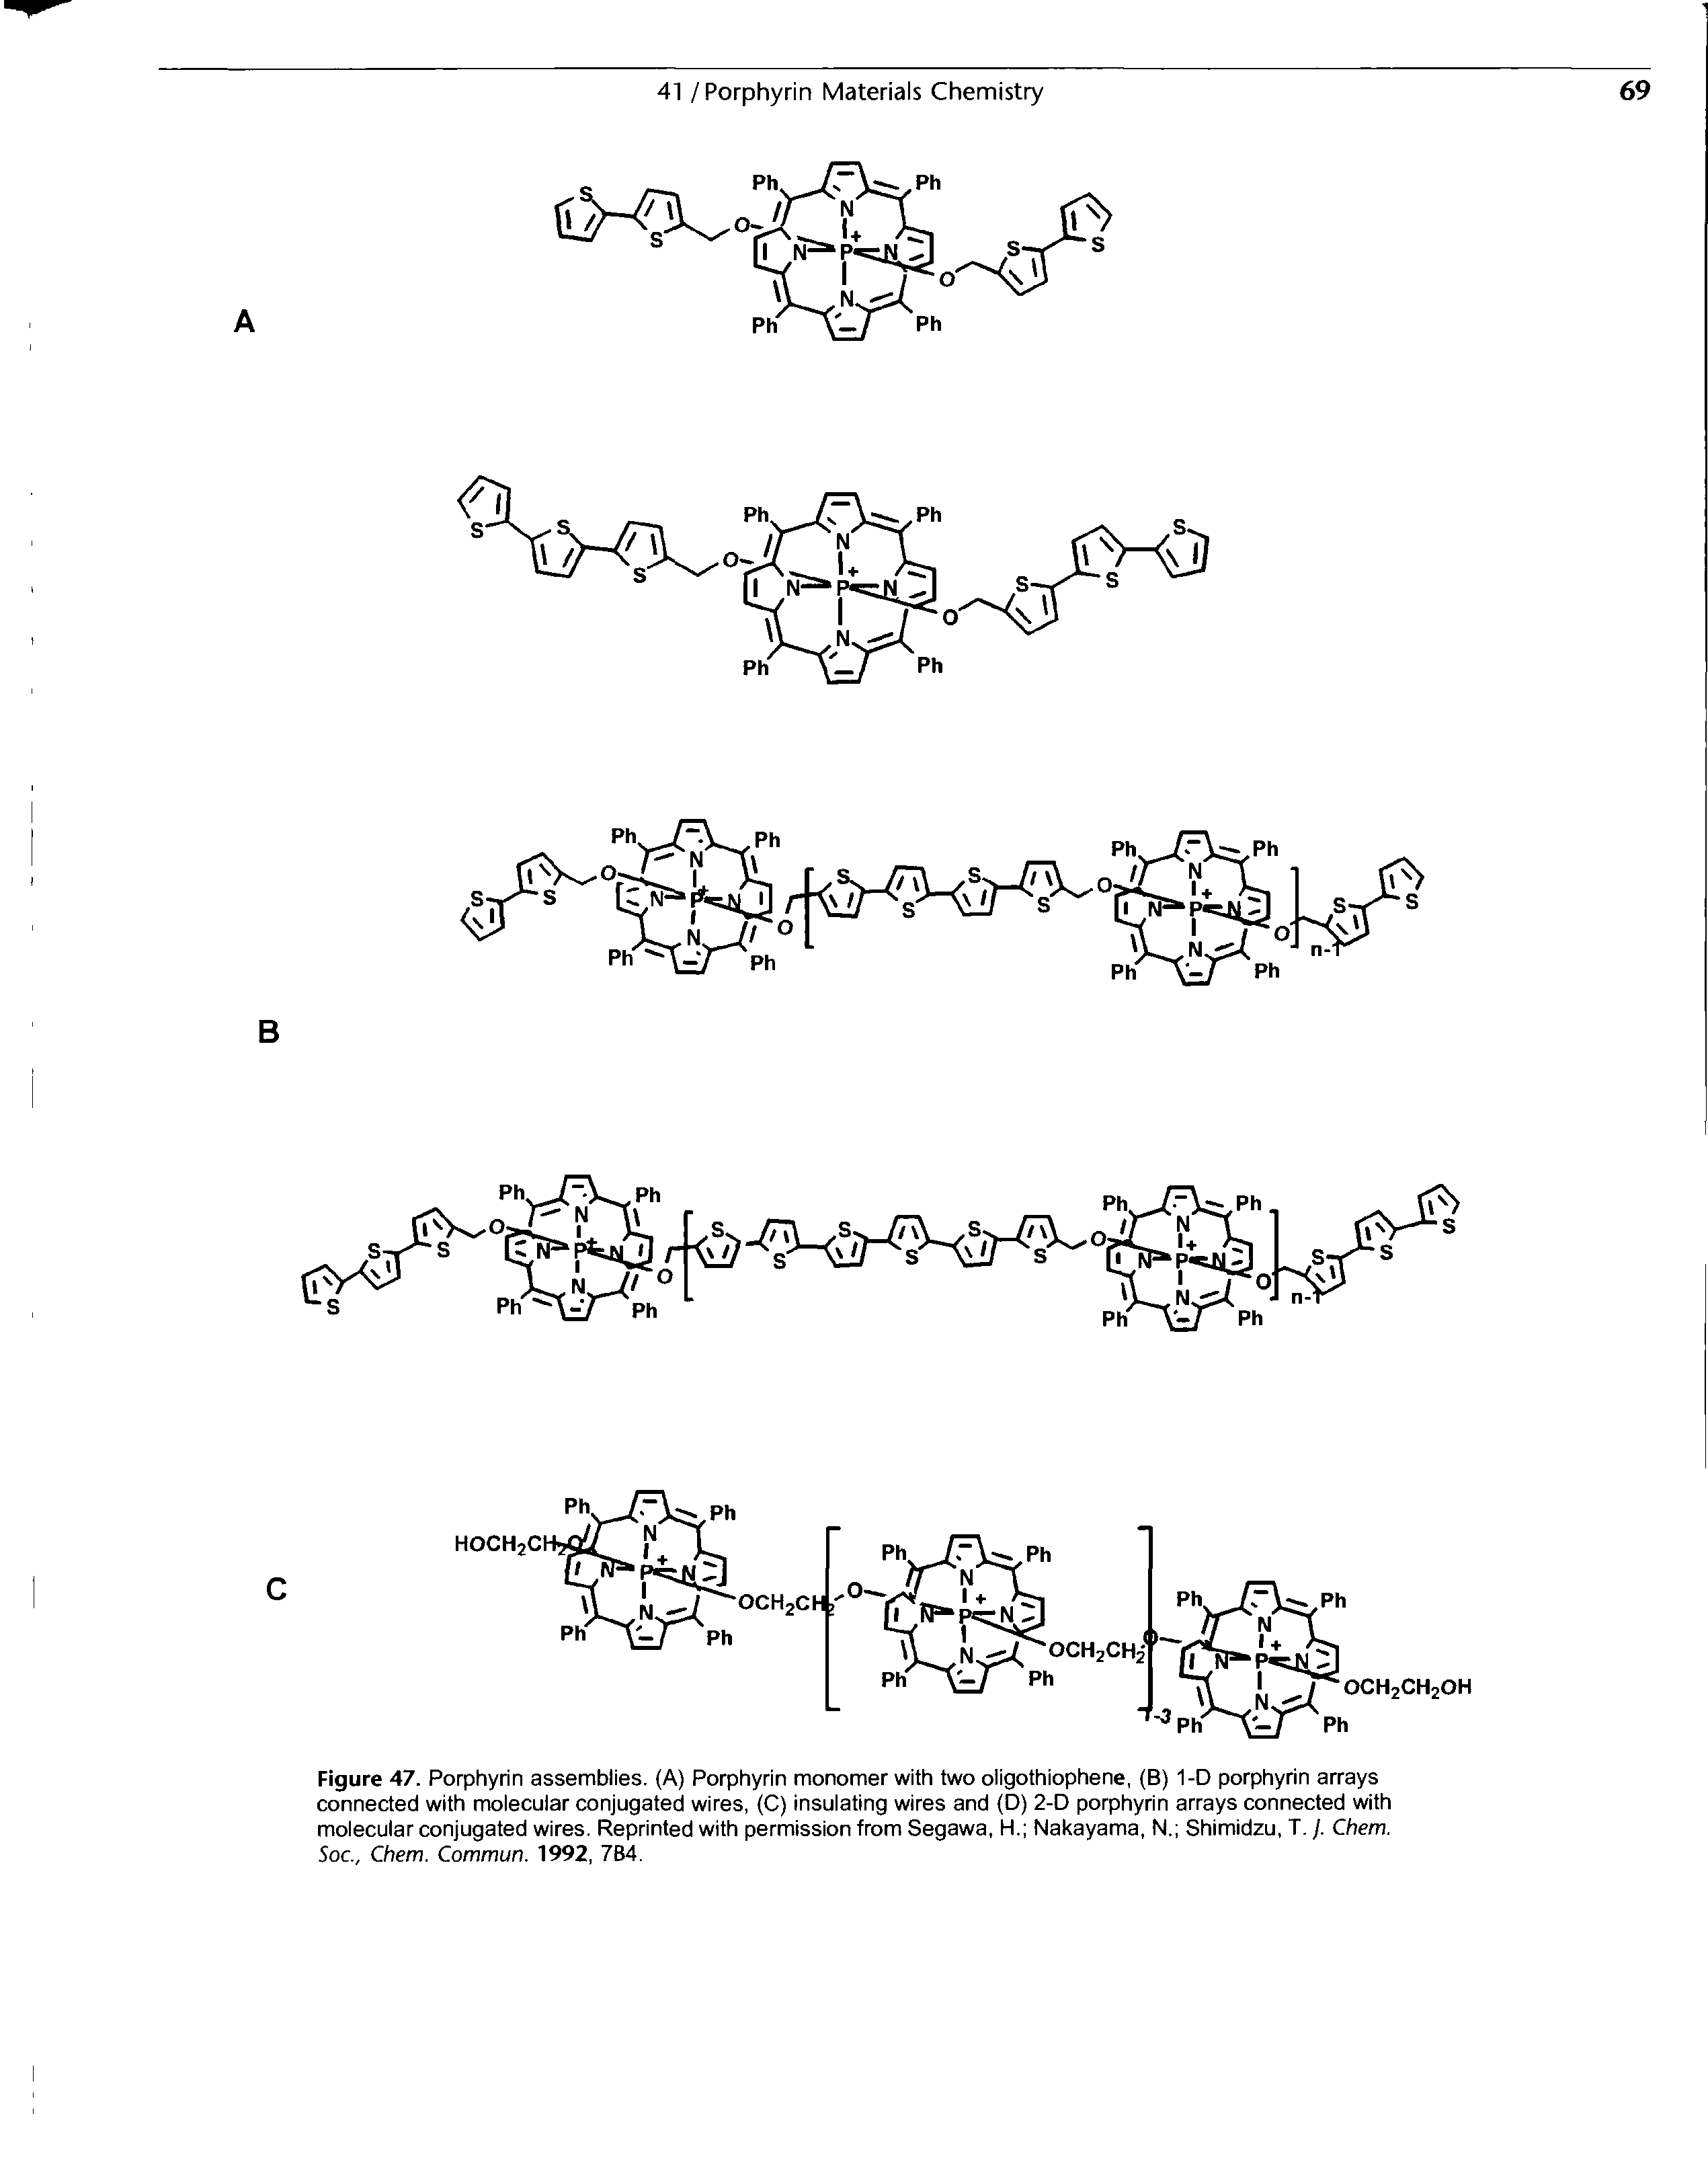 Figure 47. Porphyrin assemblies. (A) Porphyrin monomer with two oligothiophene, (B) 1-D porphyrin arrays connected with molecular conjugated wires, (C) insulating wires and (D) 2-D porphyrin arrays connected with molecular conjugated wires. Reprinted with permission from Segawa, H. Nakayama, N. Shimidzu, T, /. Chem. Soc., Chem. Commun. 1992, 7B4.